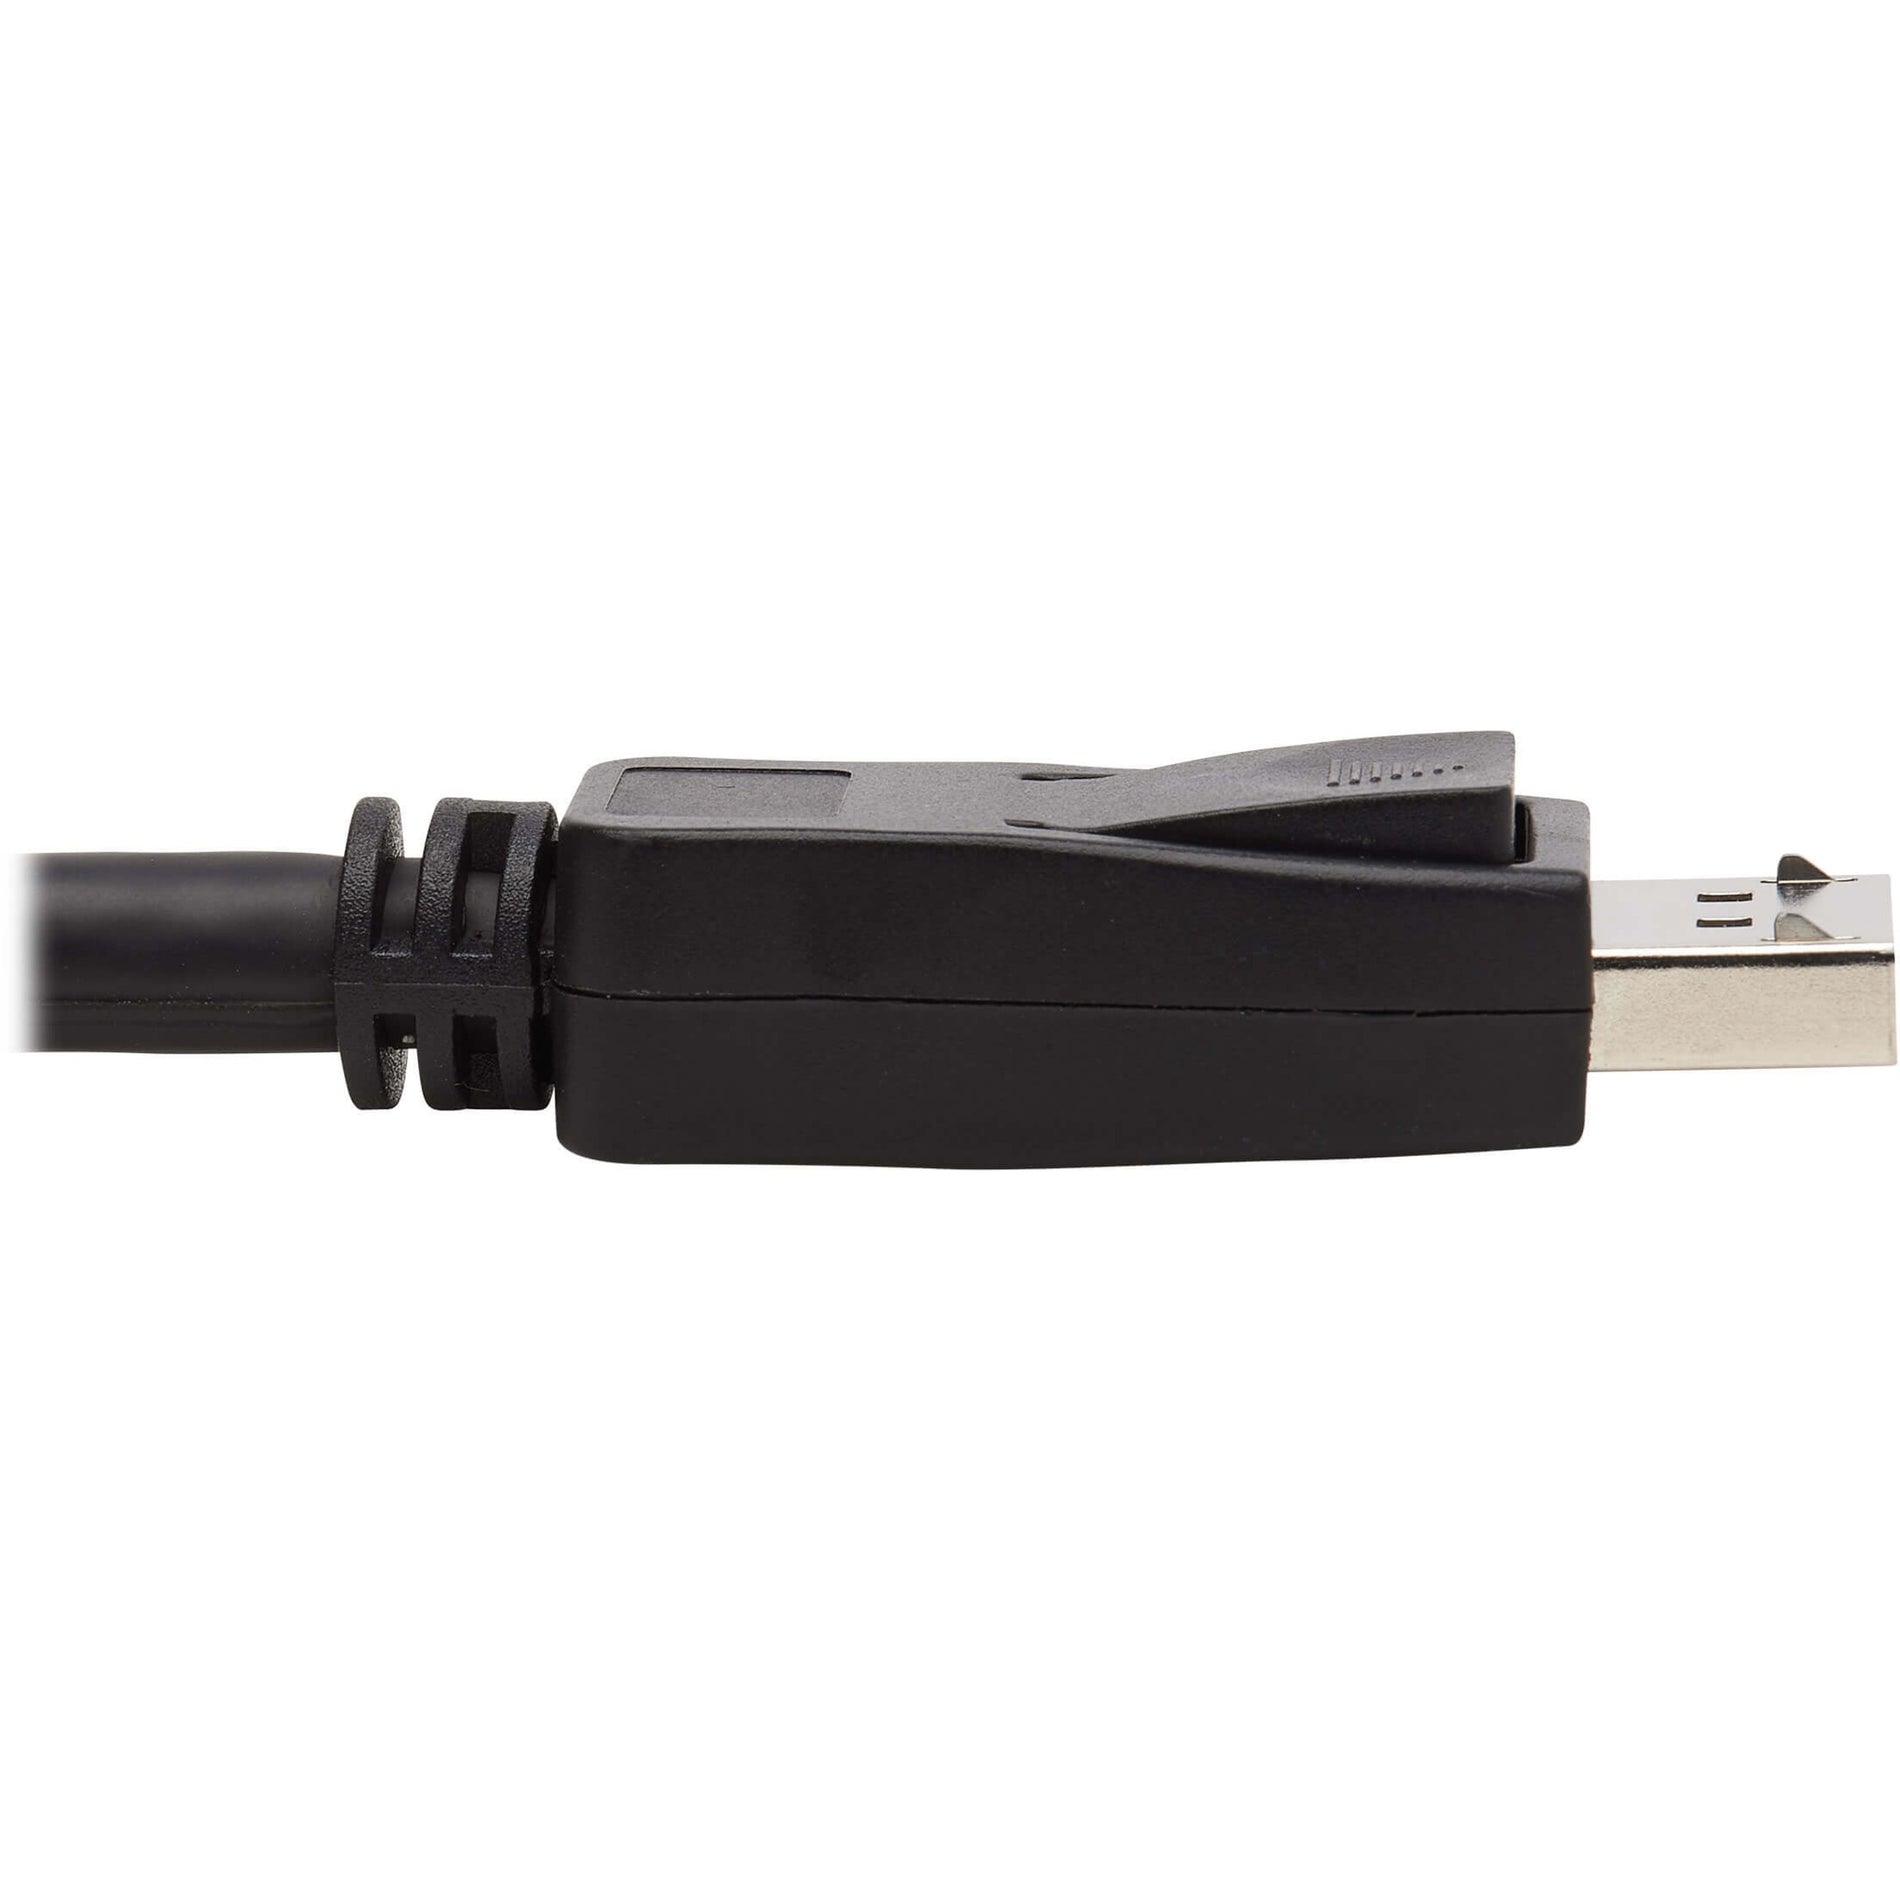 Tripp Lite - イートンによるP783-010 KVMケーブル、4K USB 10FT Tripp Lite - トリップライト